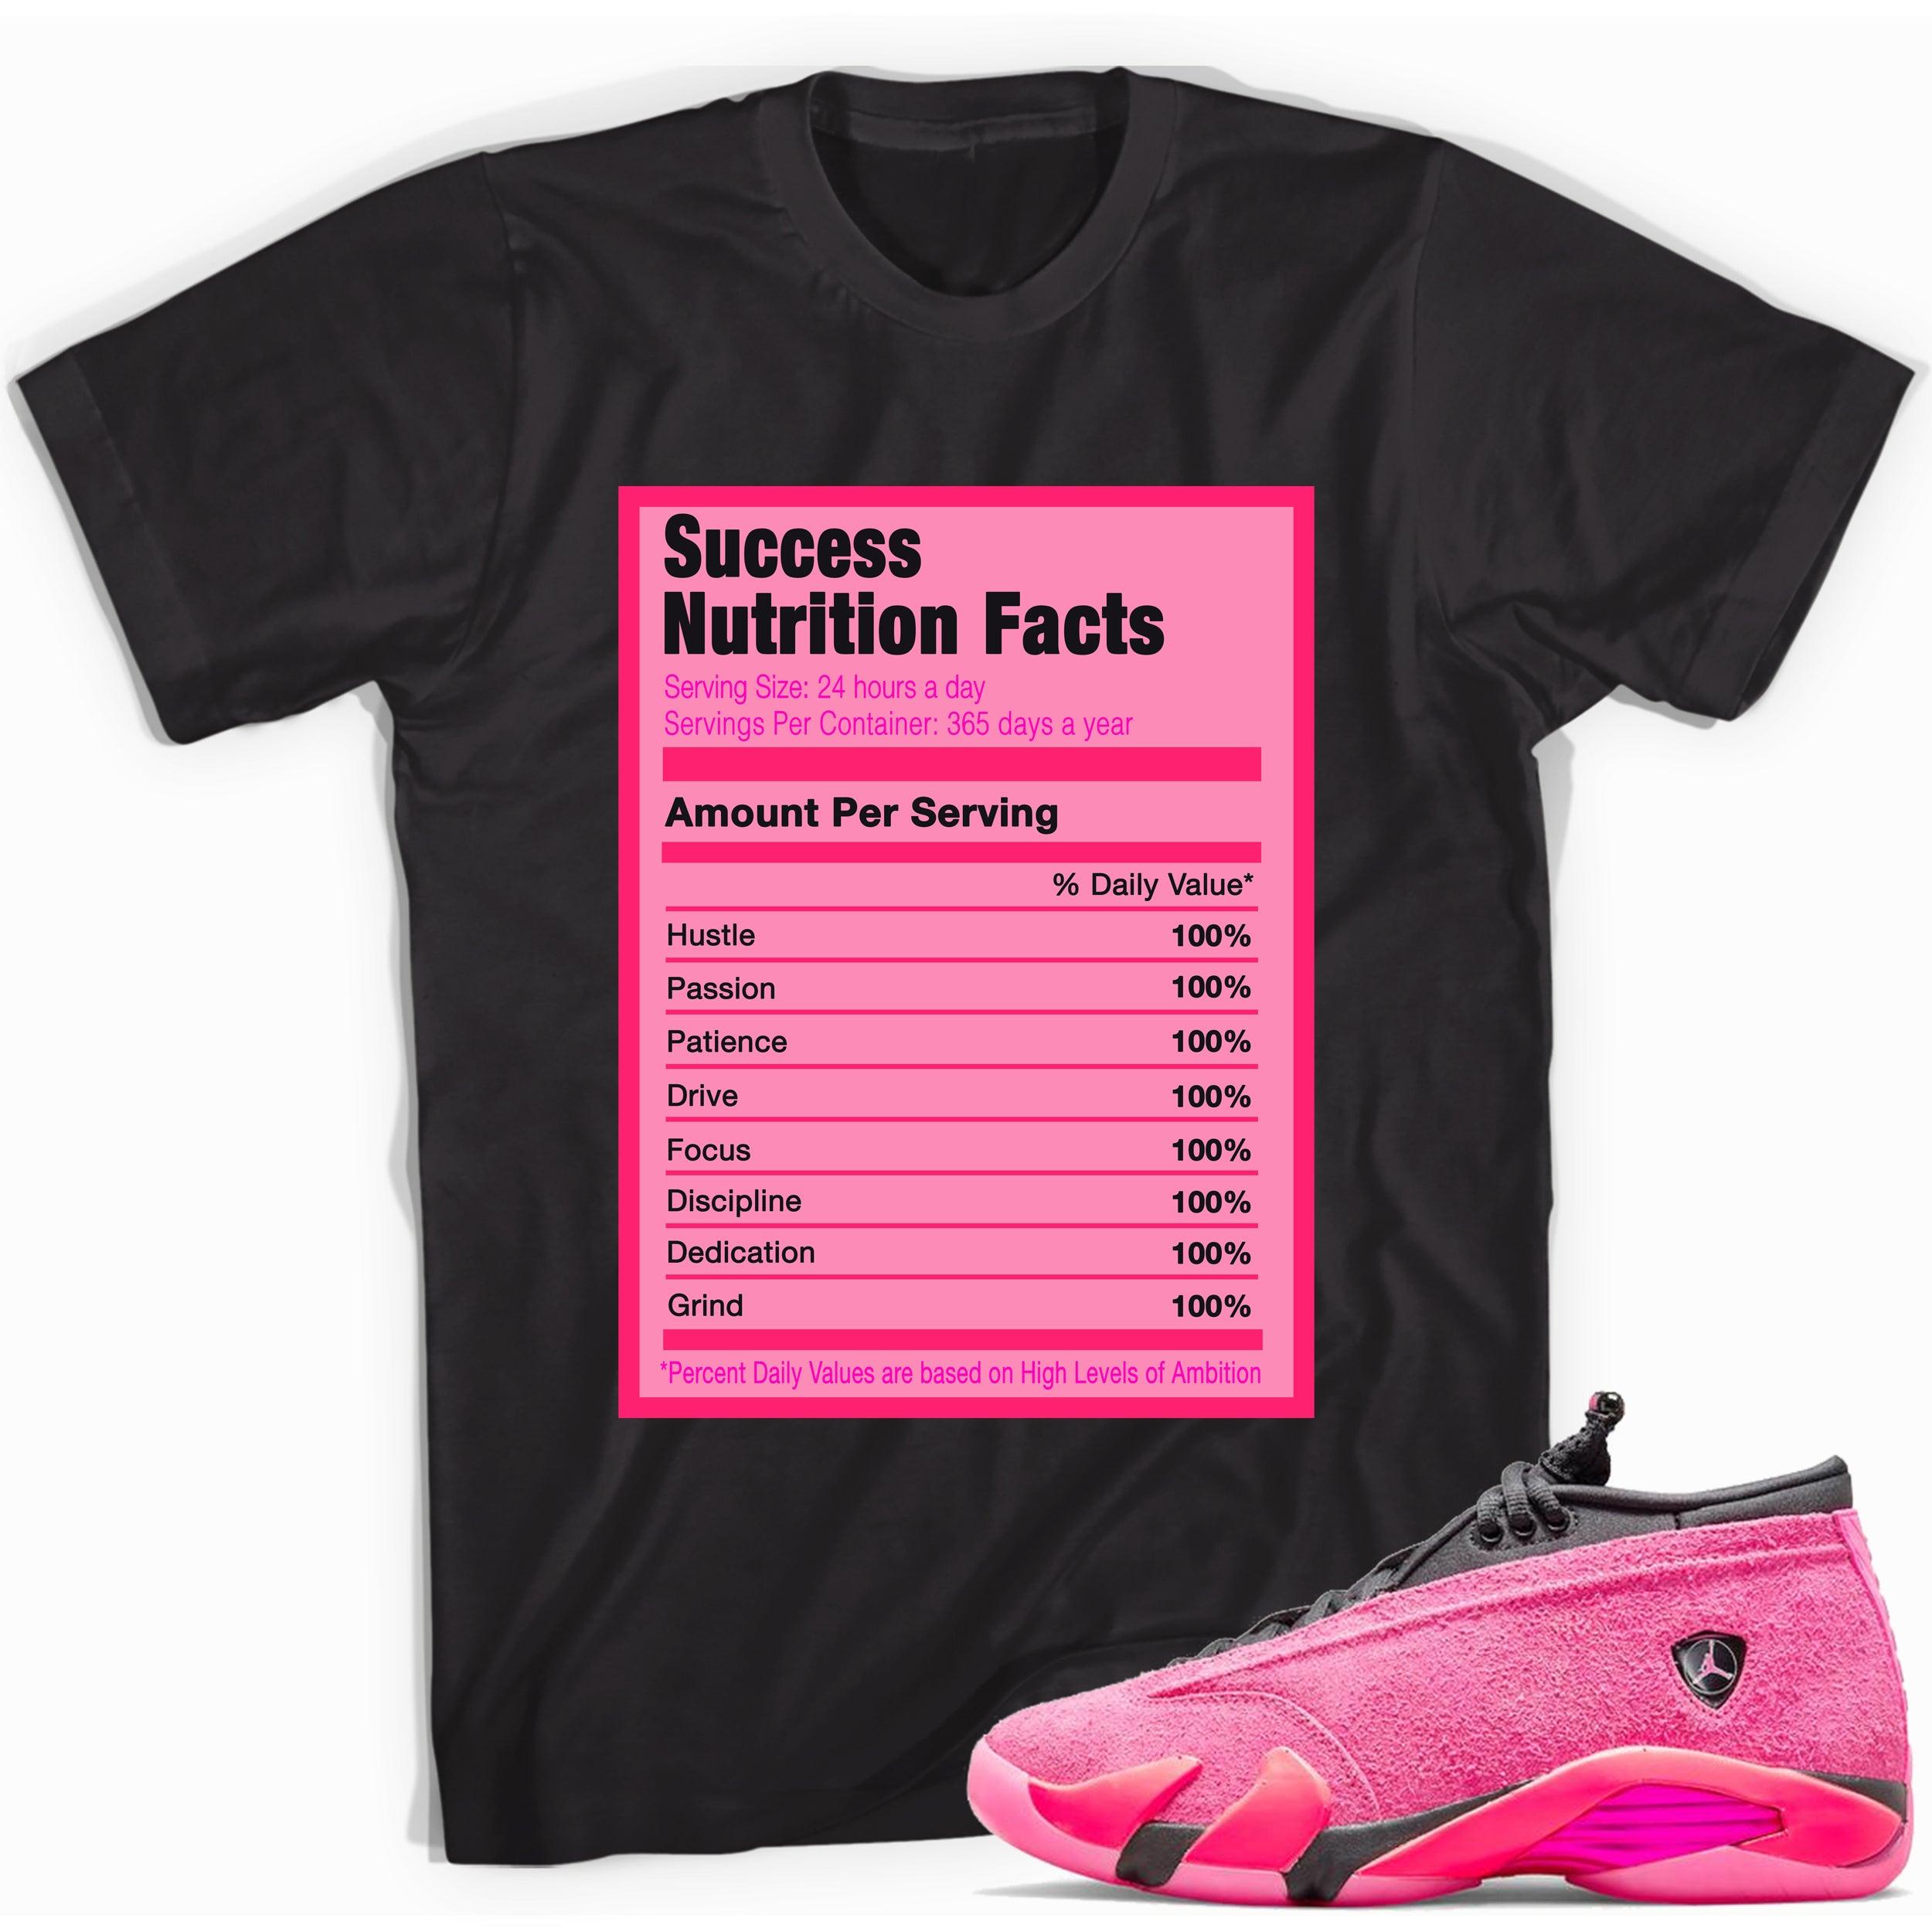 Black Success Nutrition Shirt AJ 14 Low Shocking Pink photo